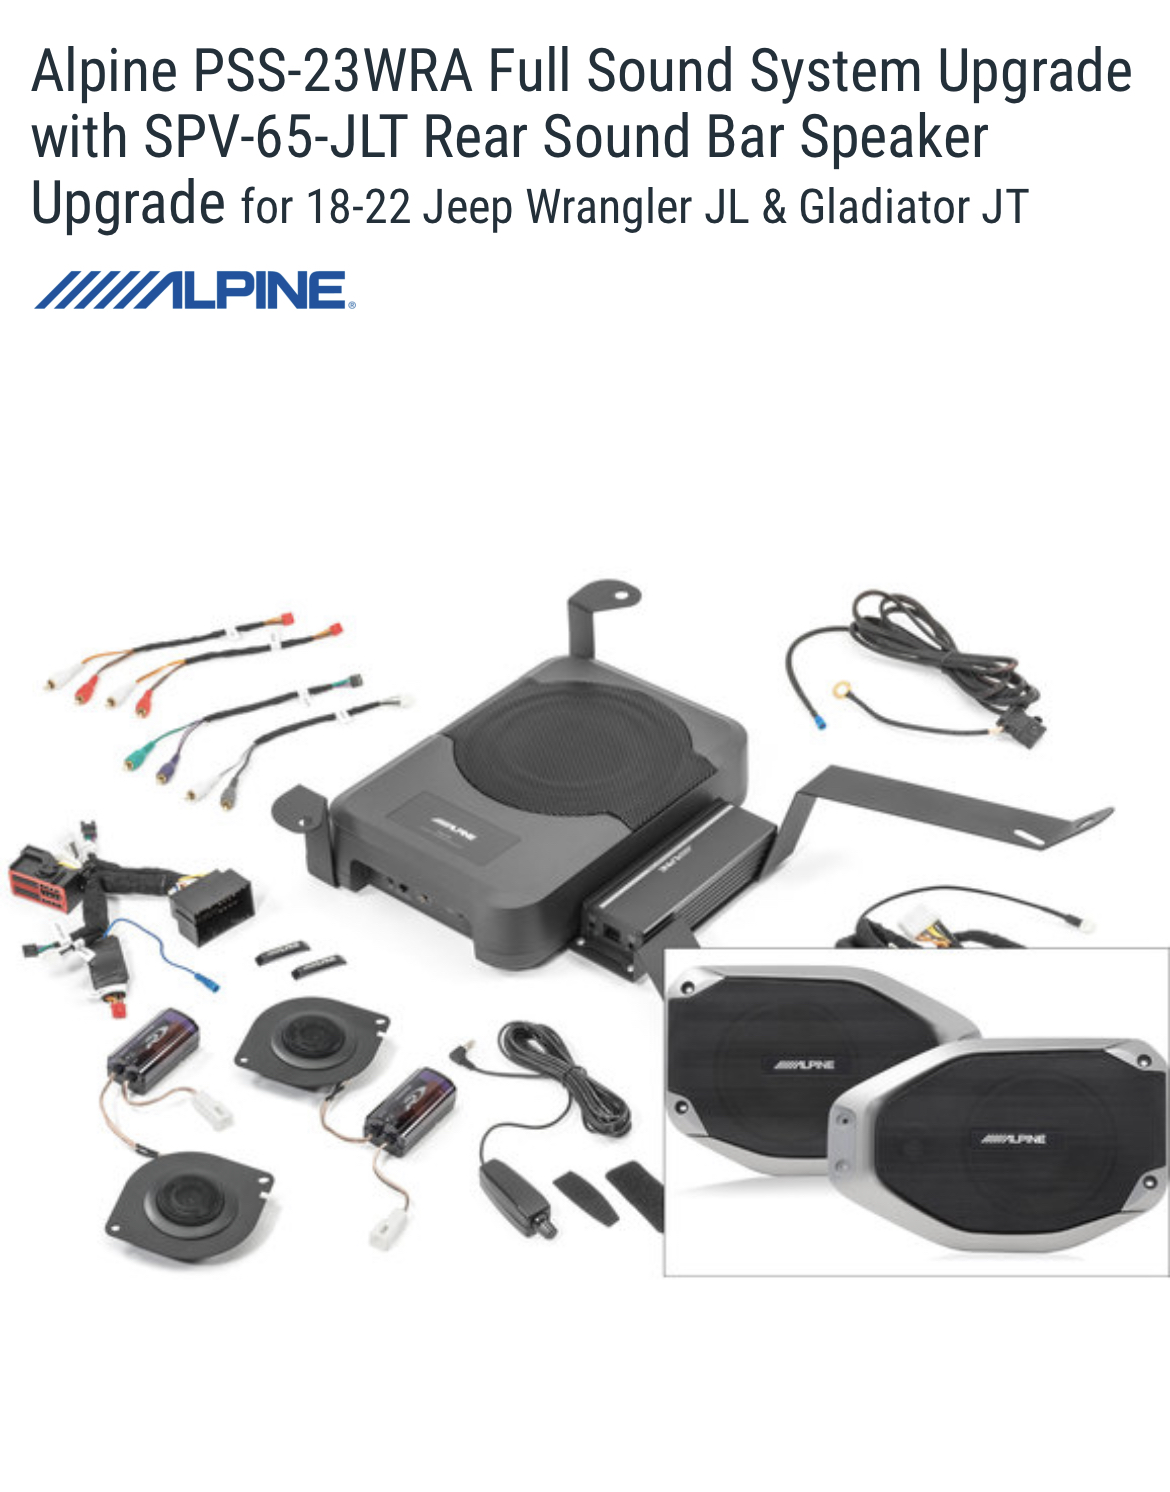 JL 4-Door Alpine PSS-23WRA Full Sound System Upgrade - Review / Feedback? | Jeep  Wrangler Forums (JL / JLU) - Rubicon, Sahara, Sport, 4xe, 392 -  